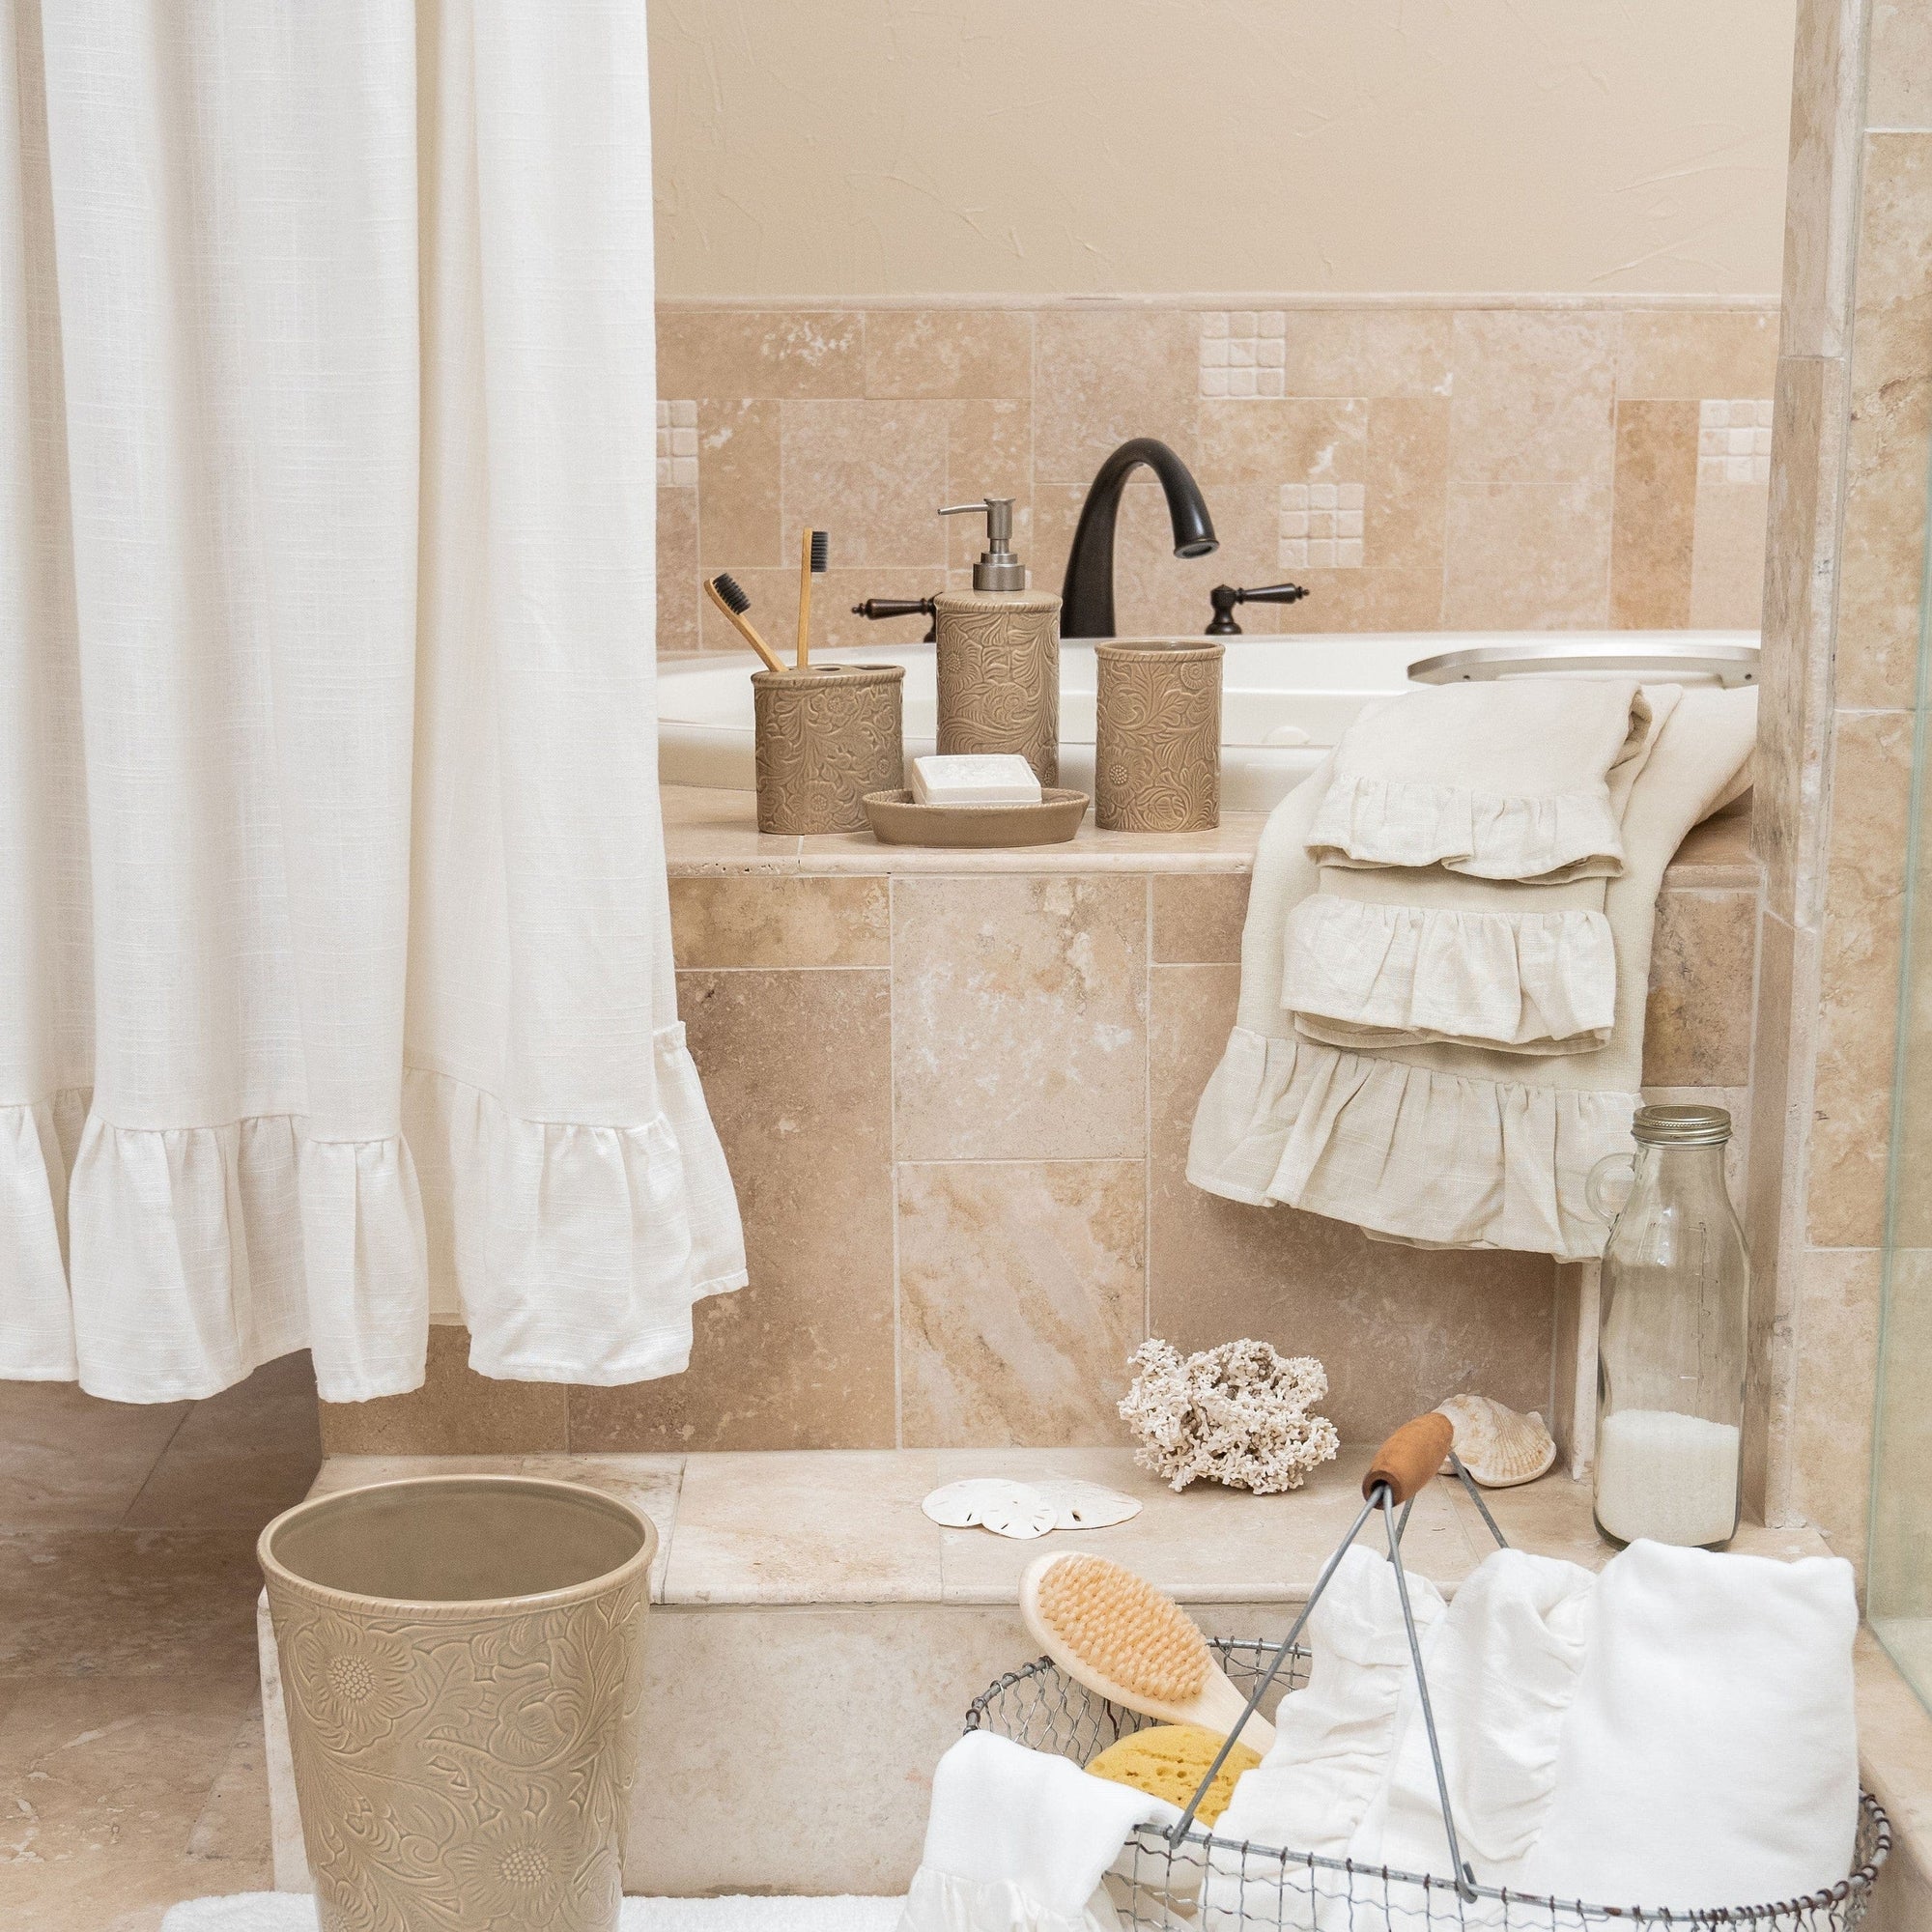 Bath & Shower Accessories, Bath Remodeling Accessories